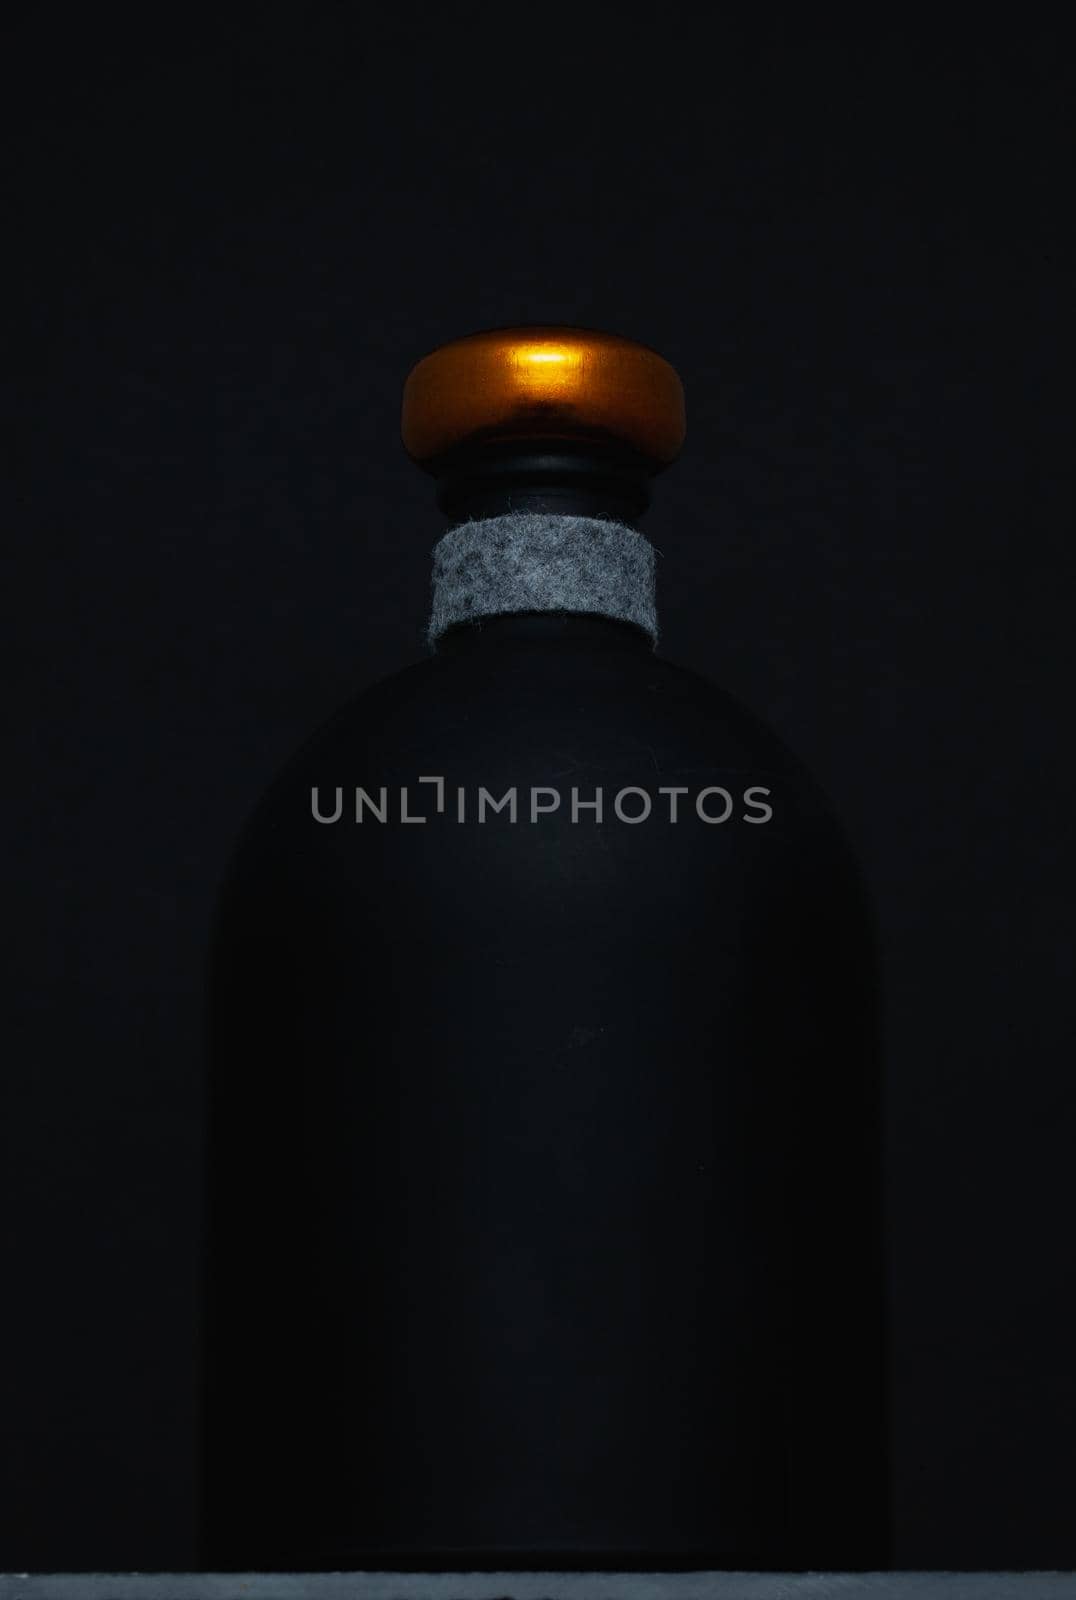 Empty Luxury Black Glass Whiskey on the black background